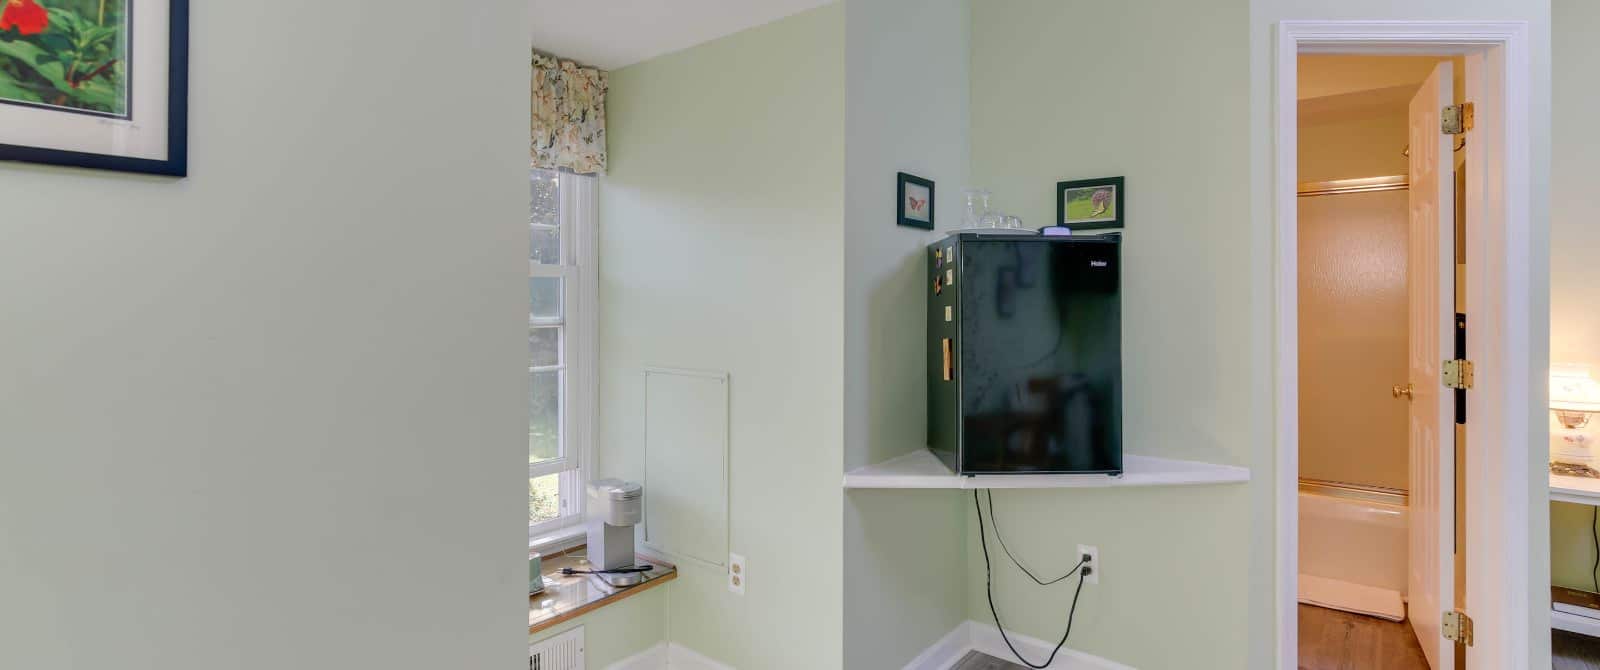 Bedroom with light green walls, hardwood flooring, mini fridge, and view into bathroom